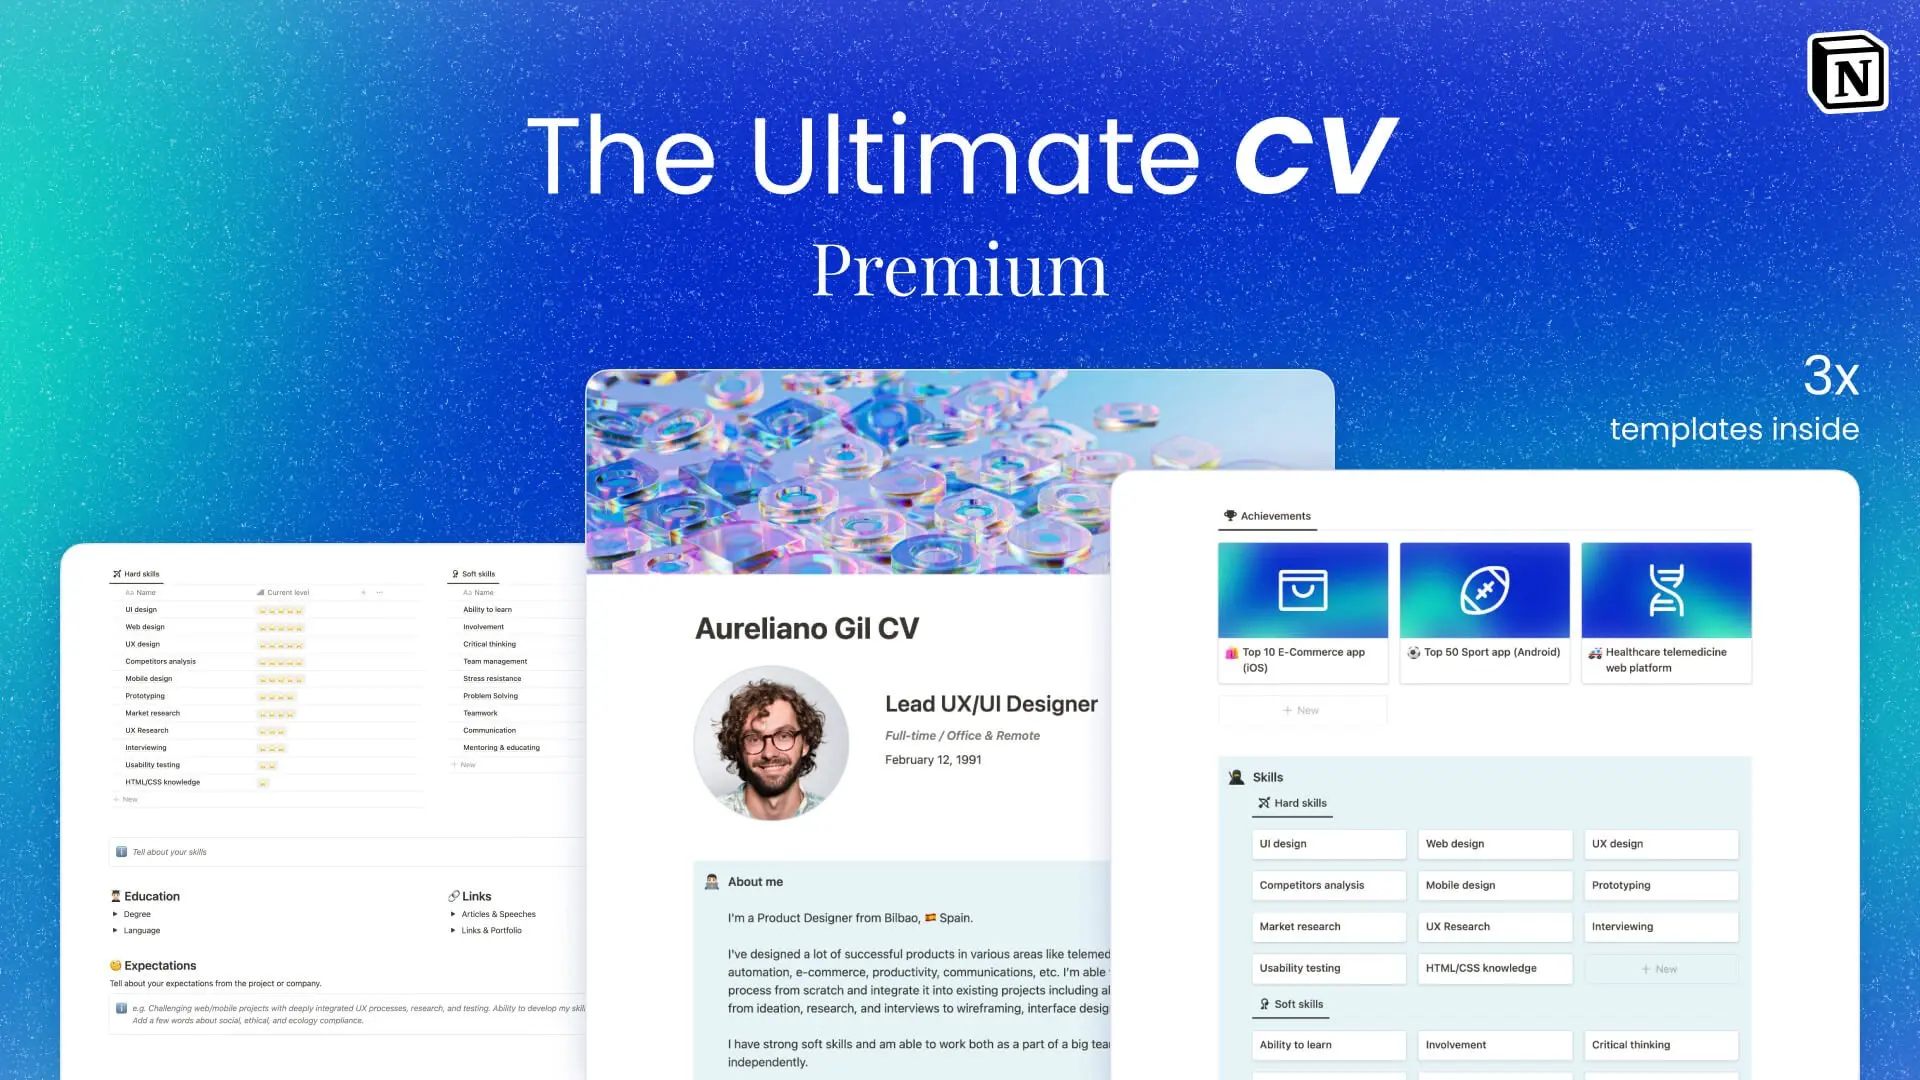 The Ultimate Cv Template Premium (3X) image